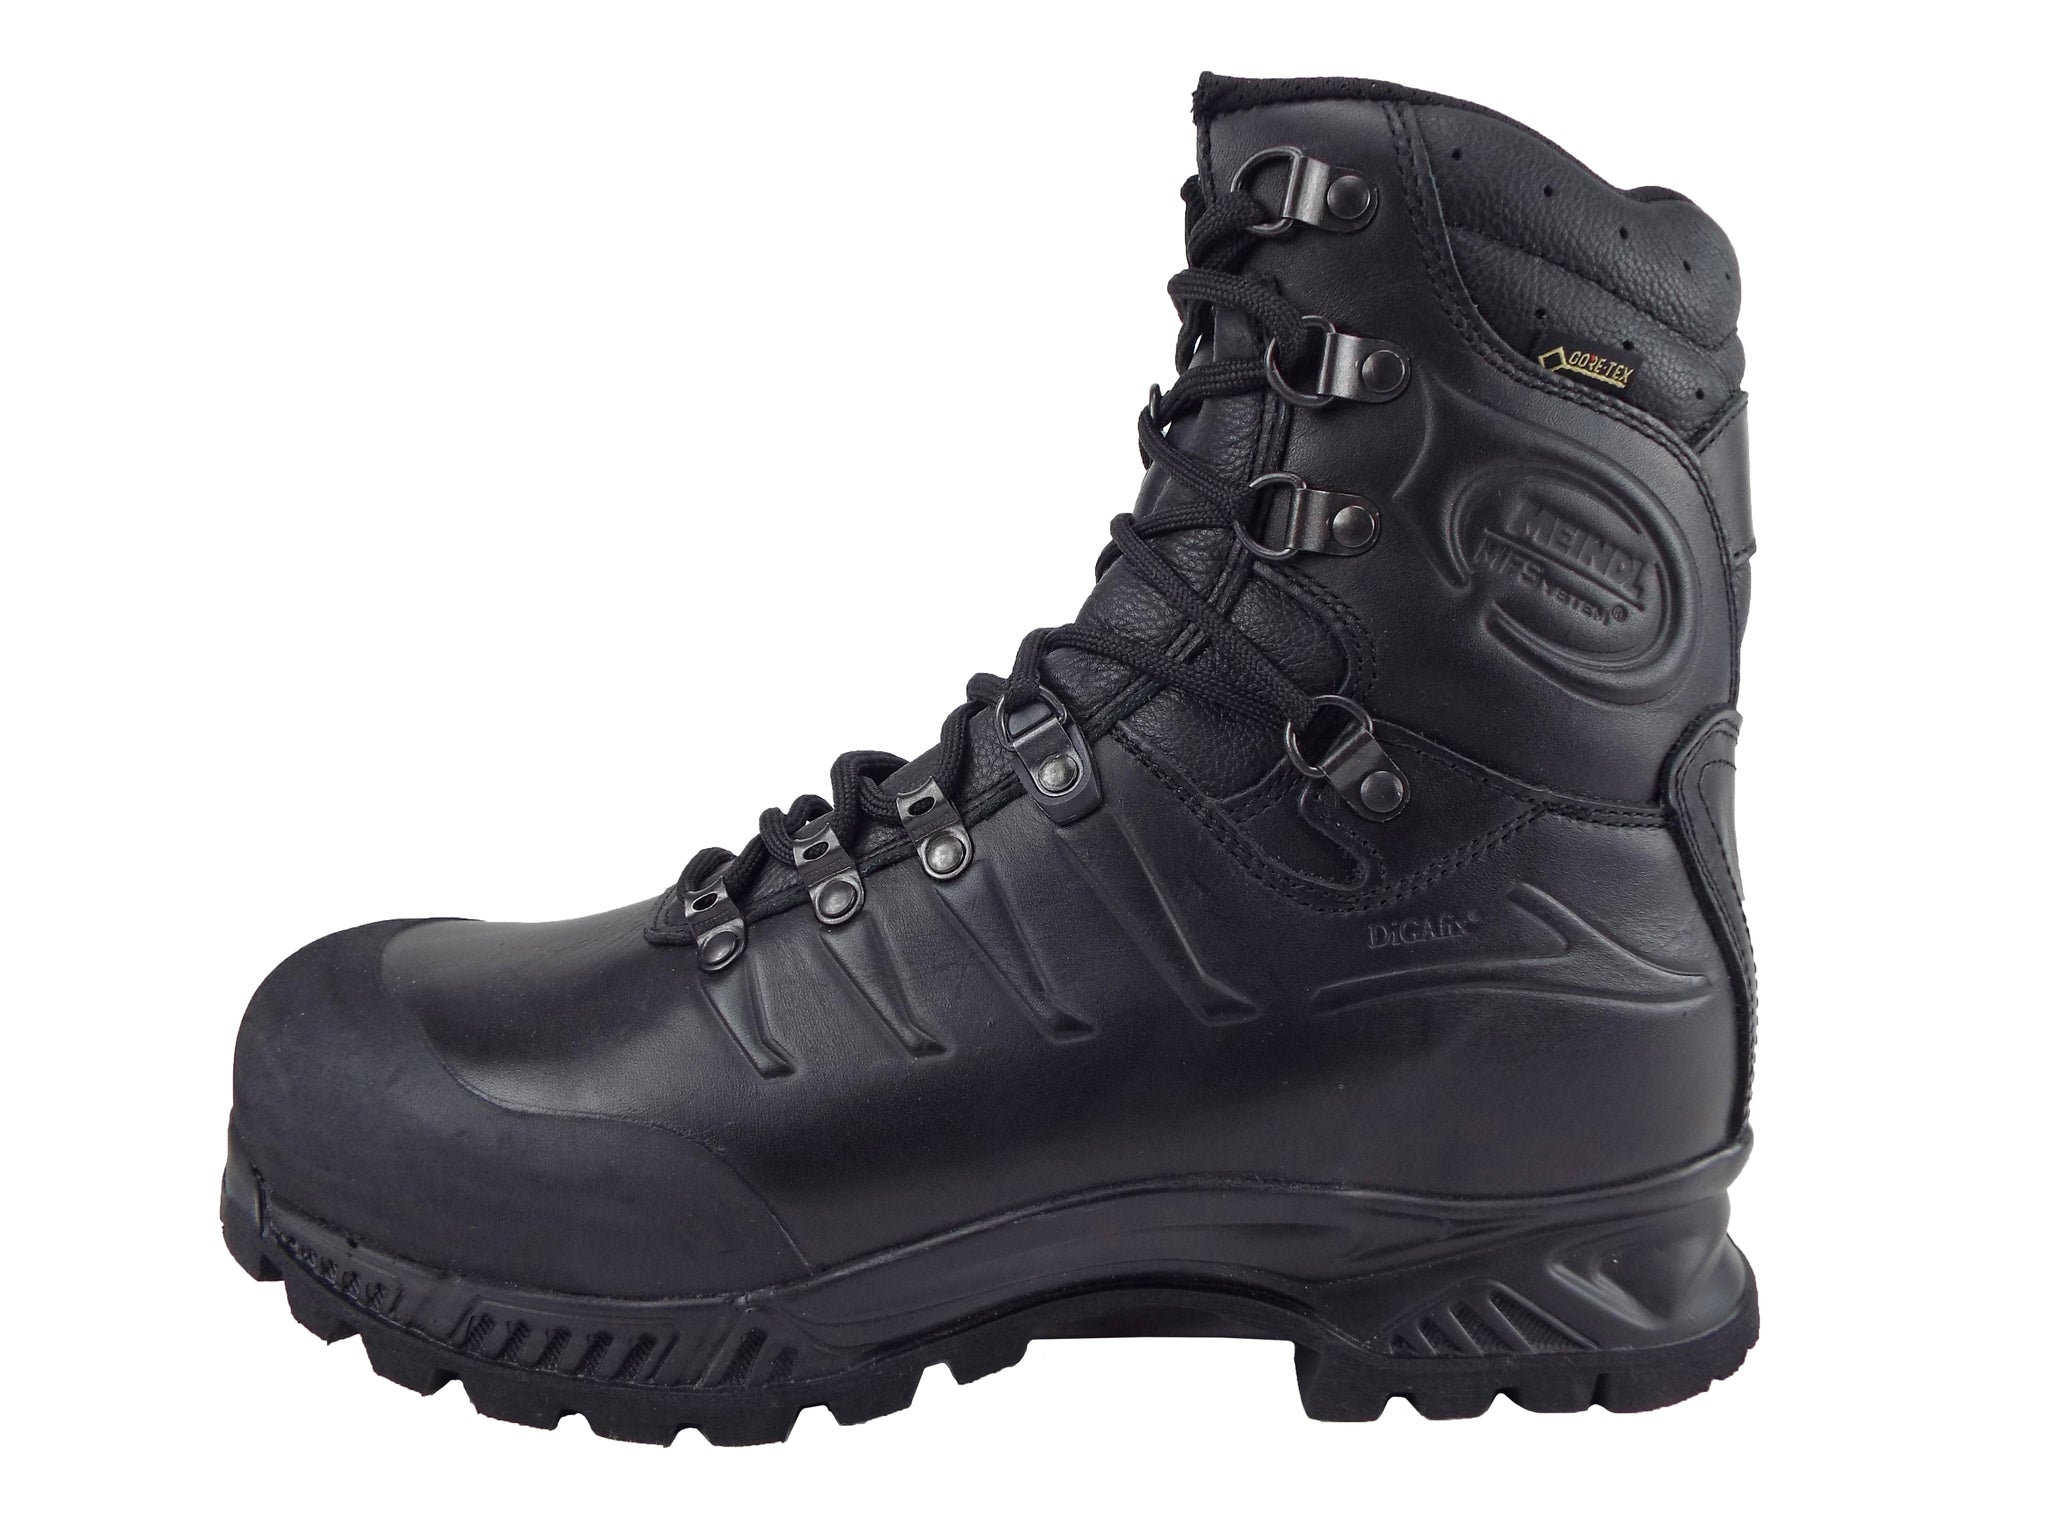 Dutch Combat Boots - brand - Gore-Tex - Forces Uniform and Kit